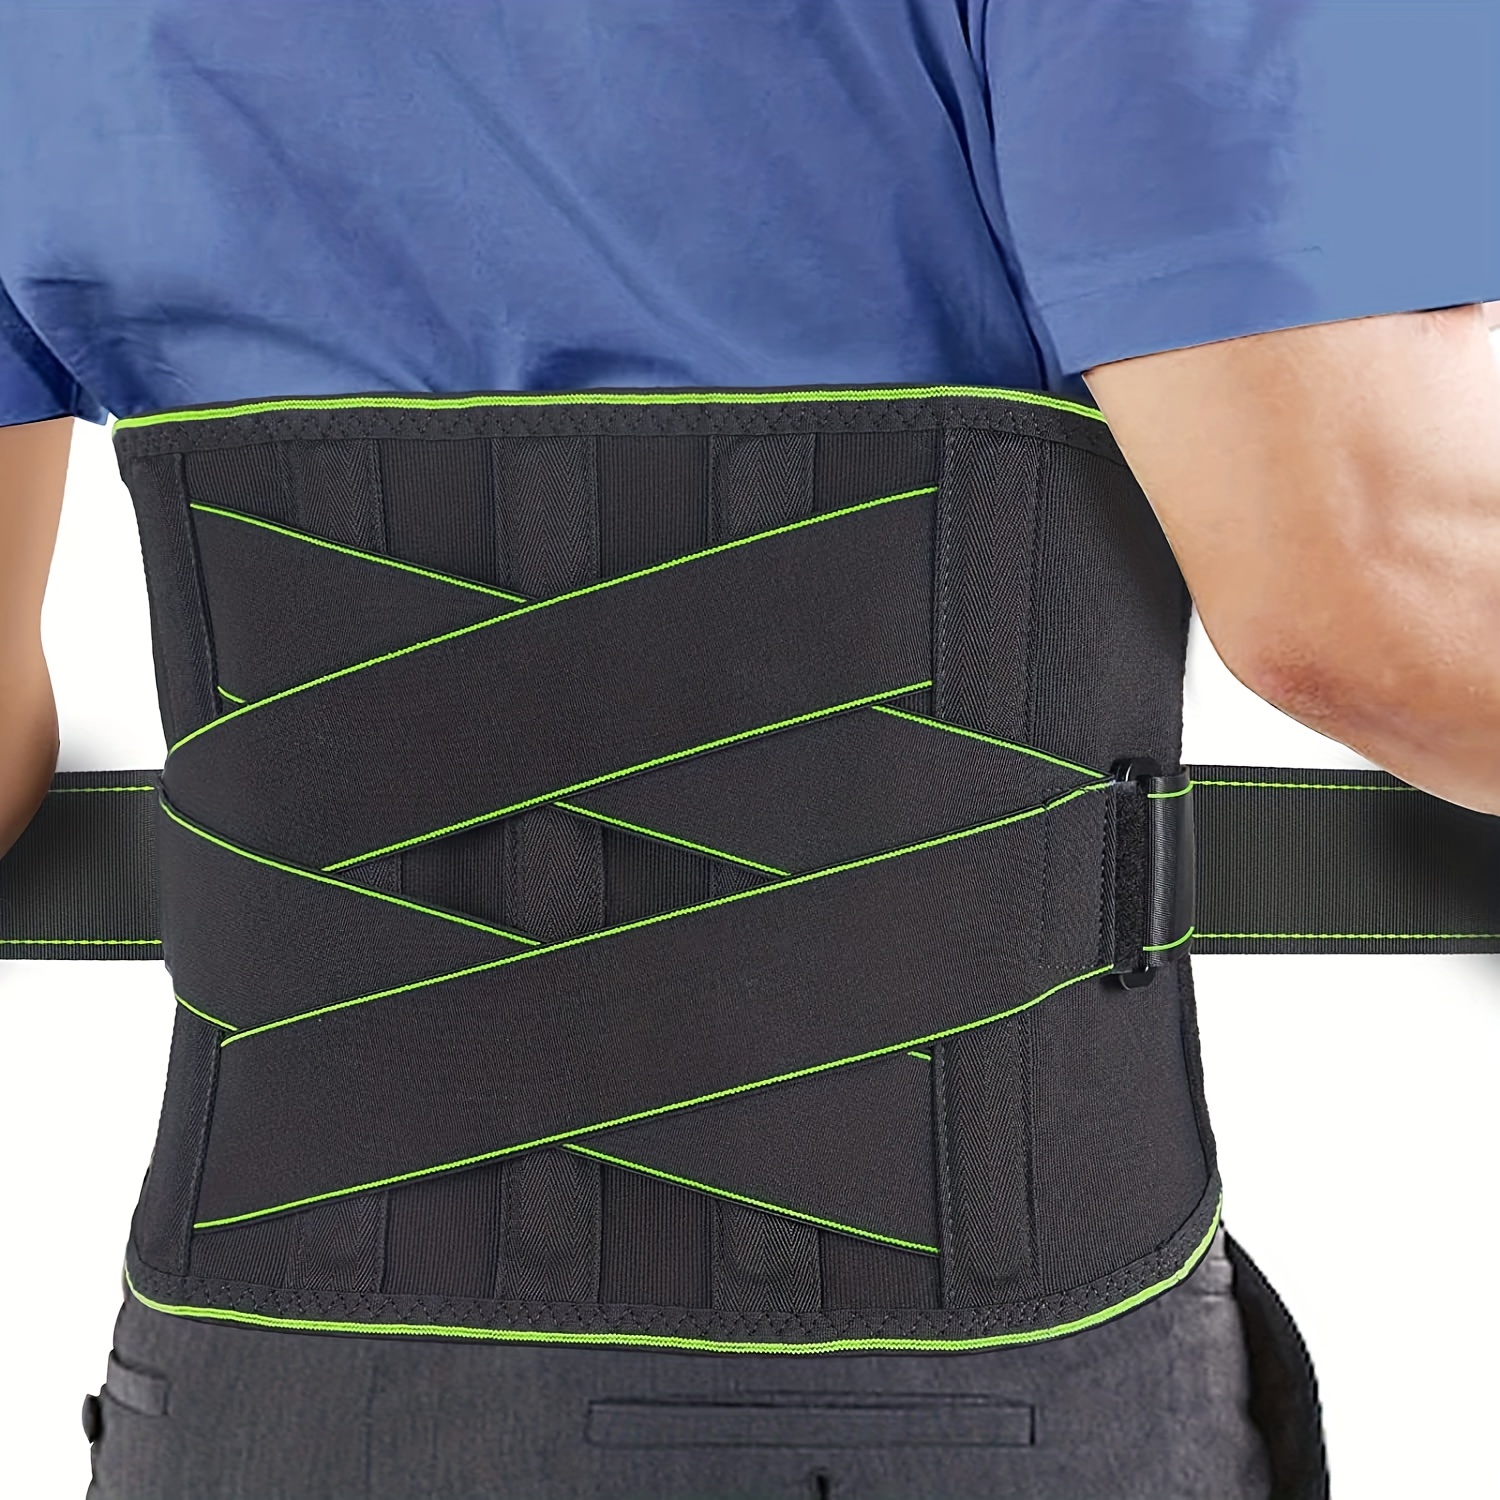 Orthopedic Lumbar Corset on the Human Body. Back Brace, Waist Support Belt  for Back Stock Photo - Image of background, pain: 239079180